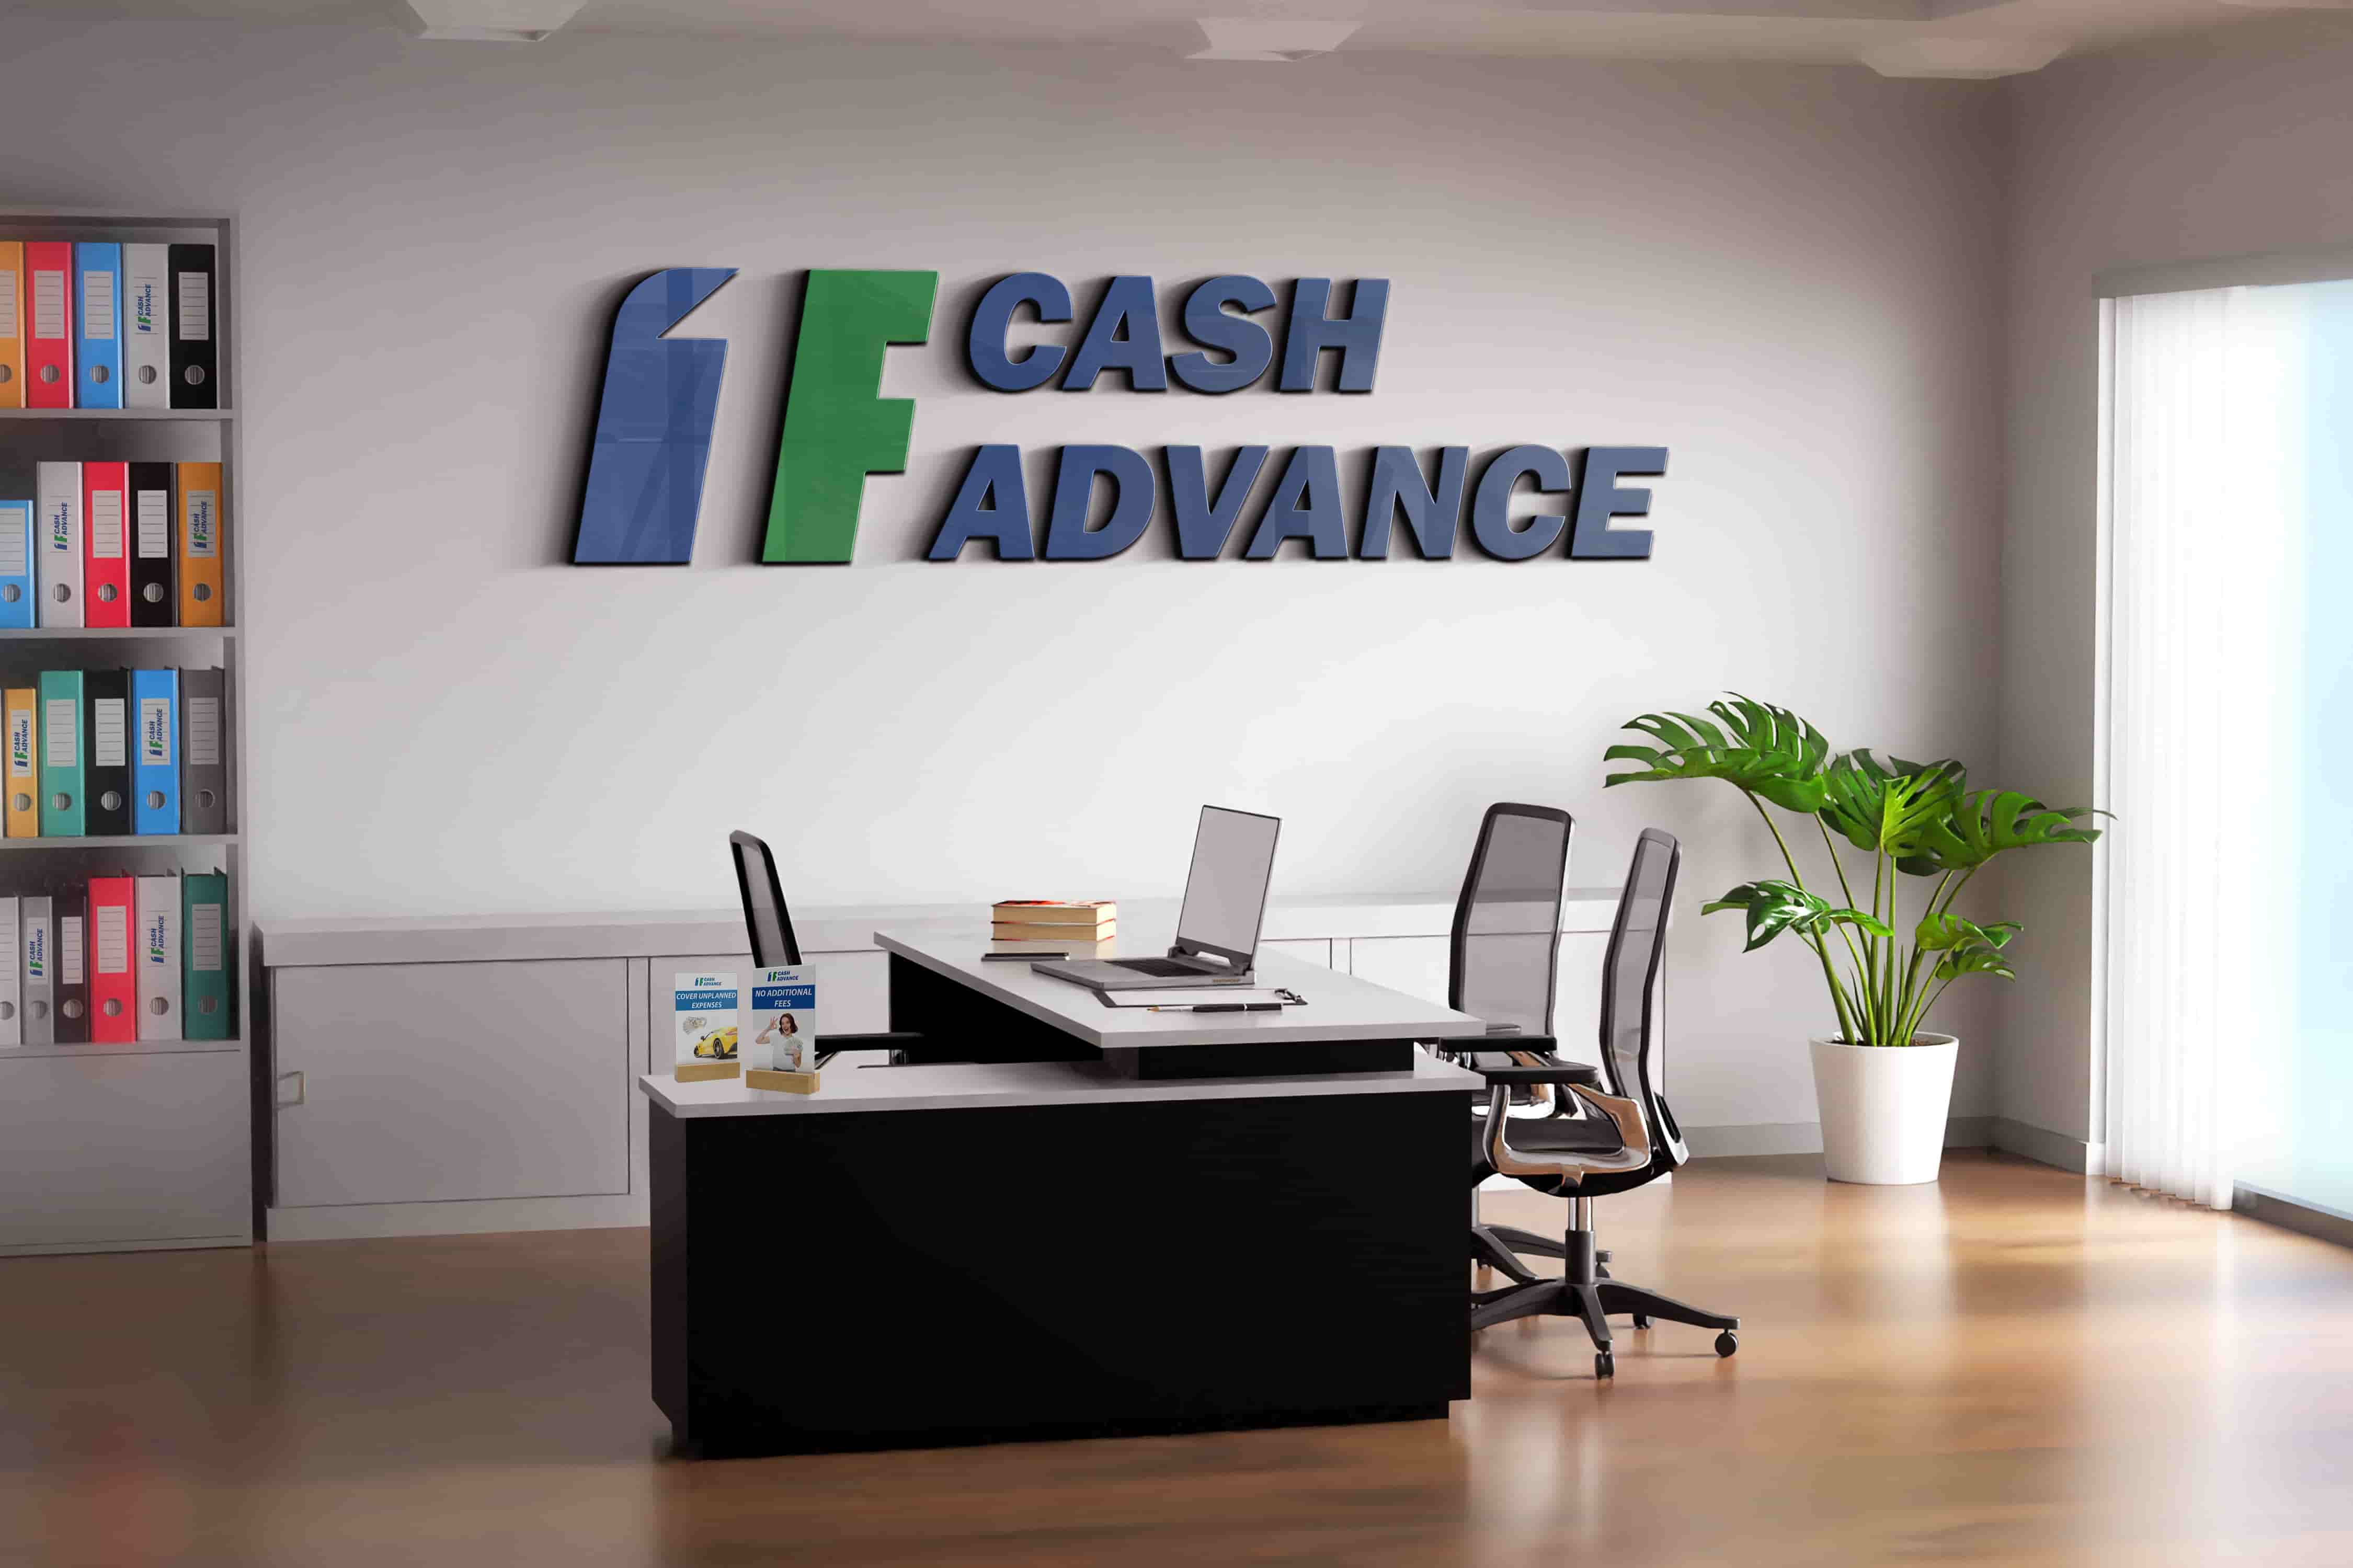 Cash advance in Wichita, KS